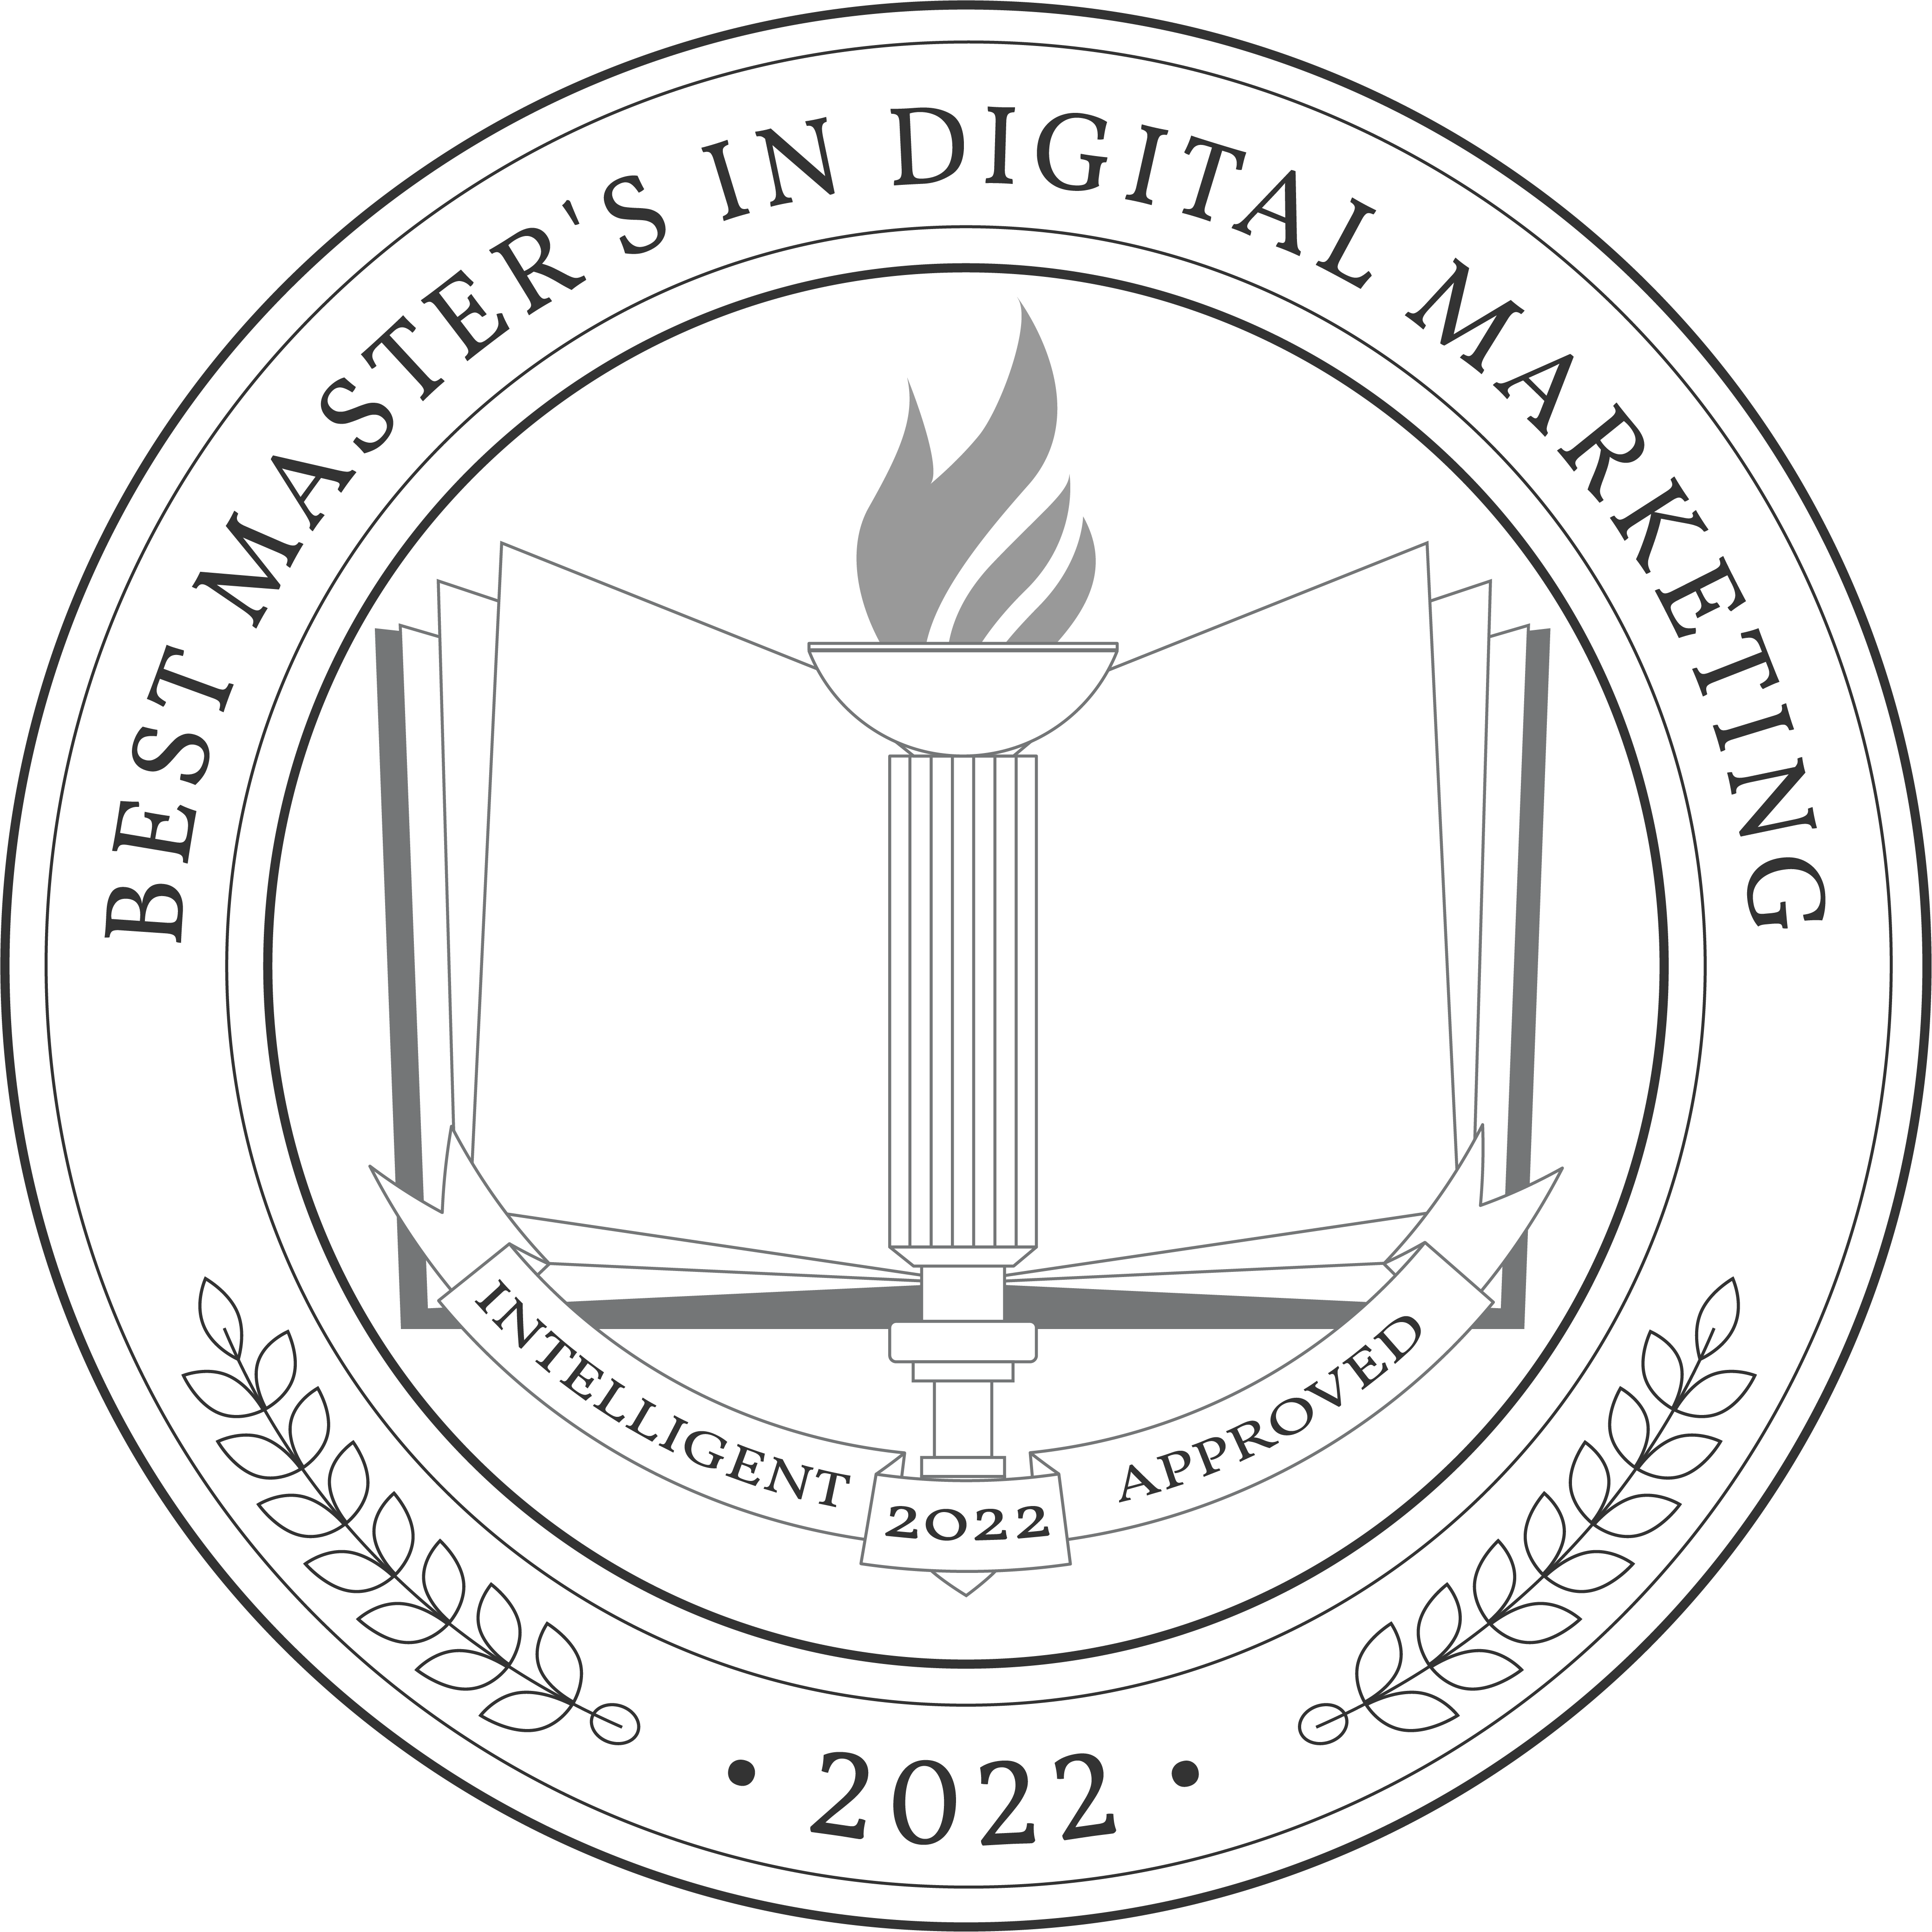 Best Online Master's in Digital Marketing Degree Programs